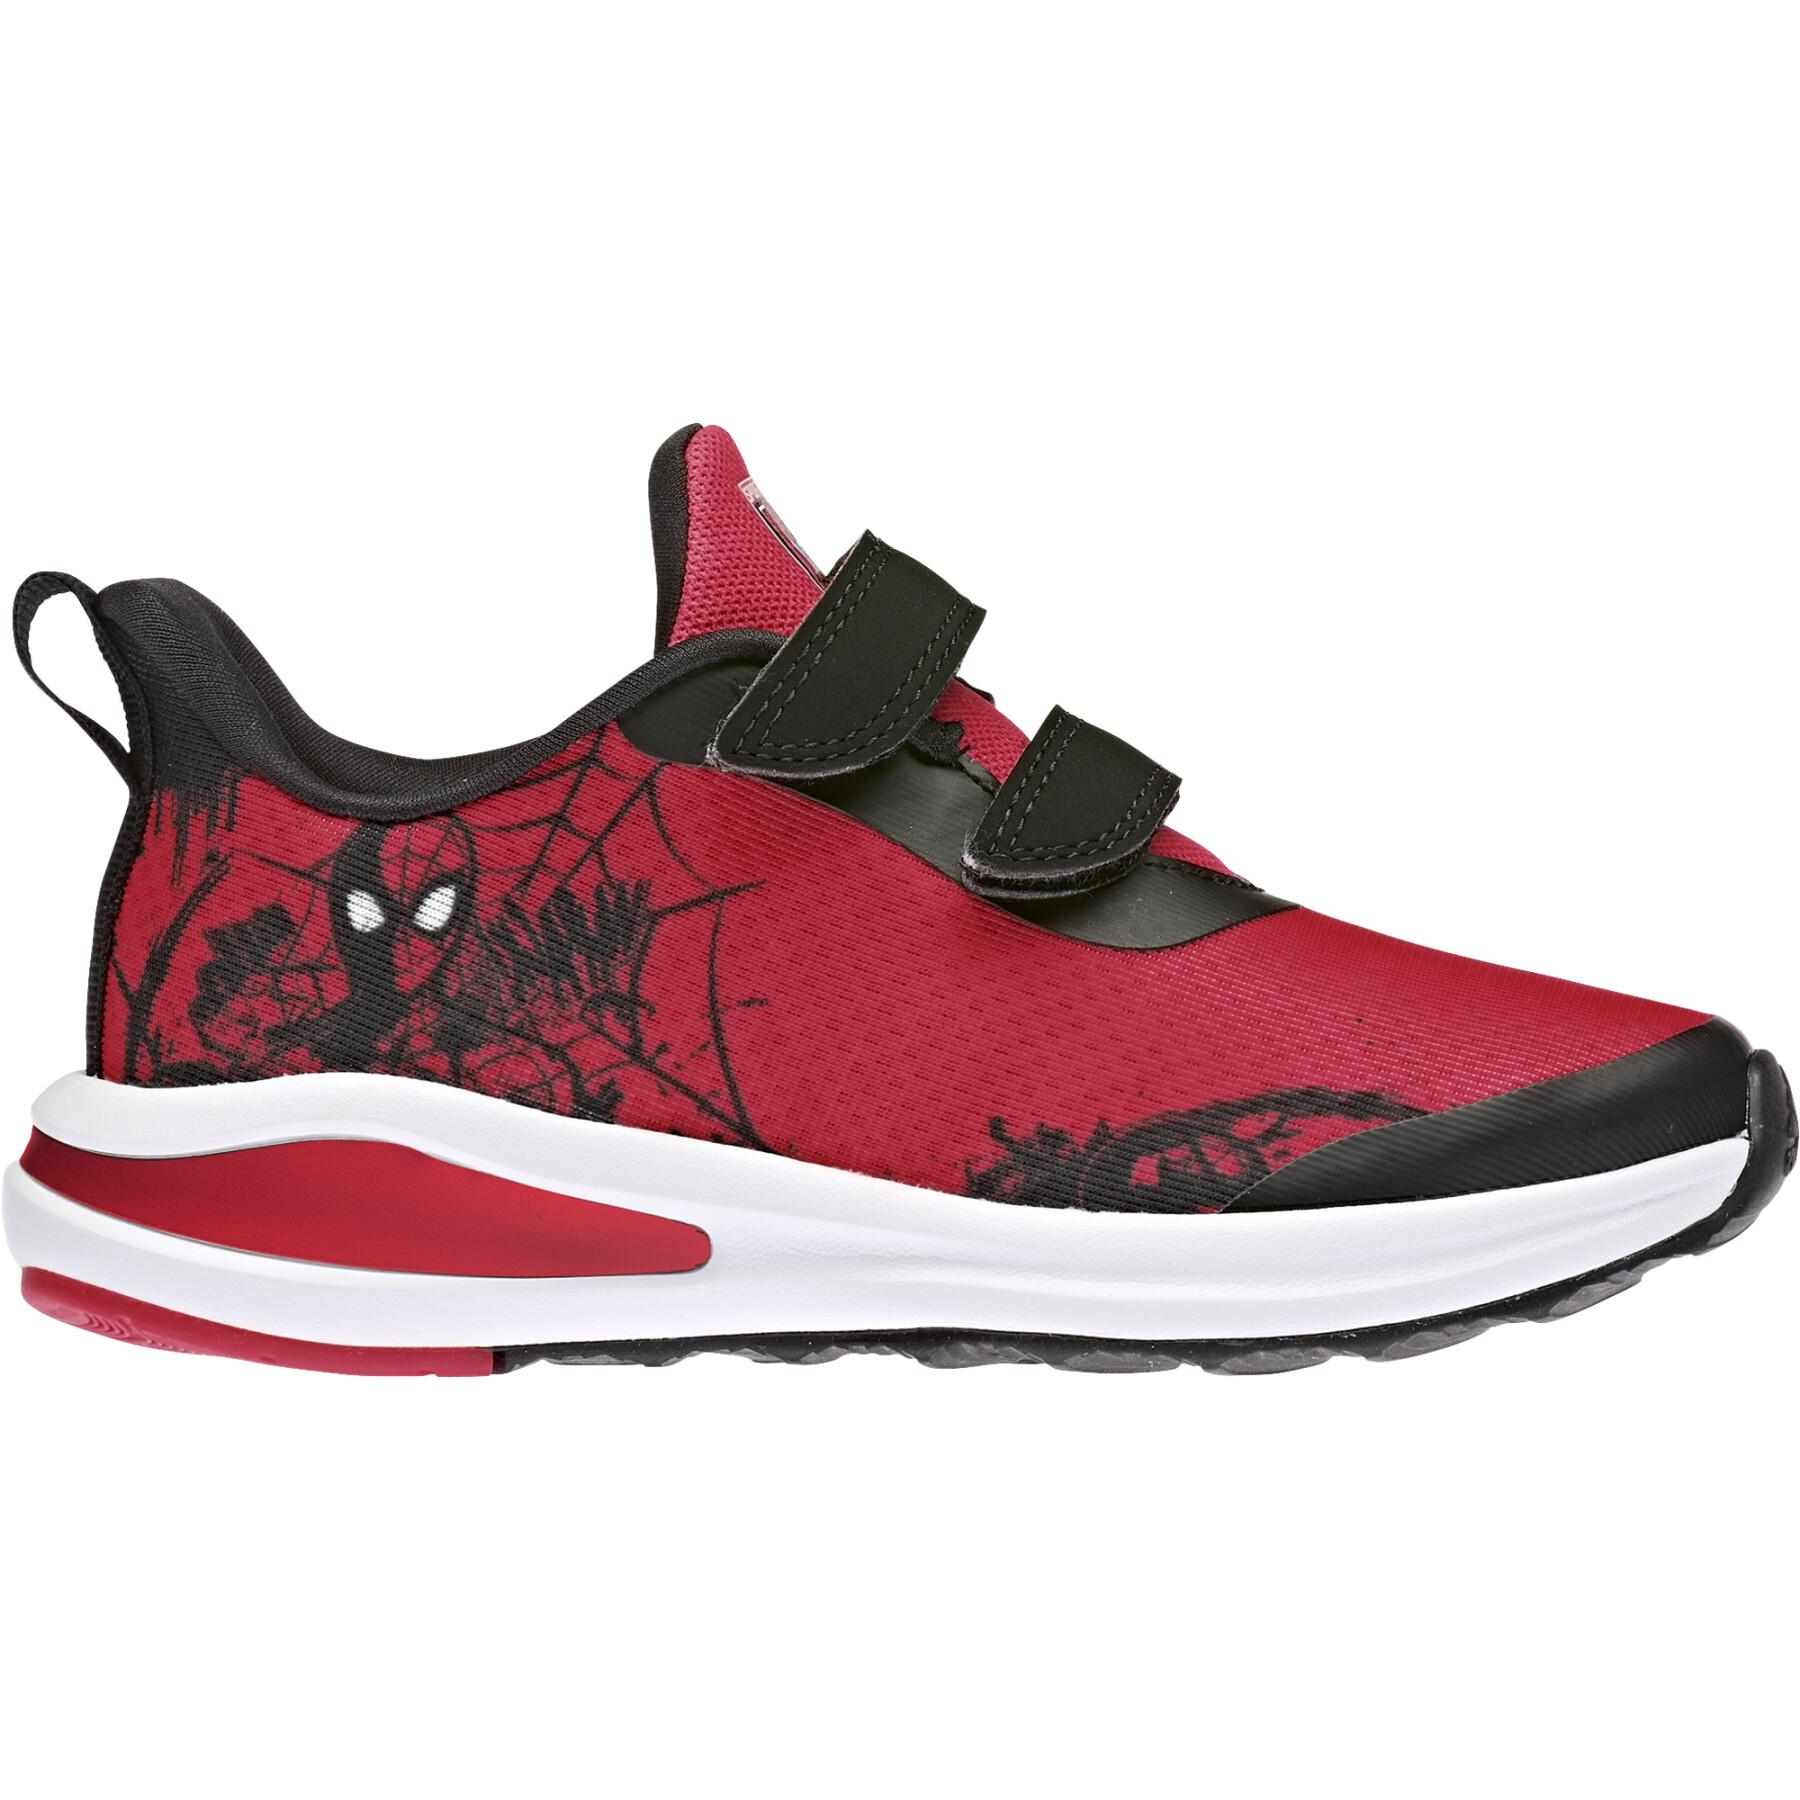 Chaussures de running enfant adidas X Marvel Spider-Man Fortarun